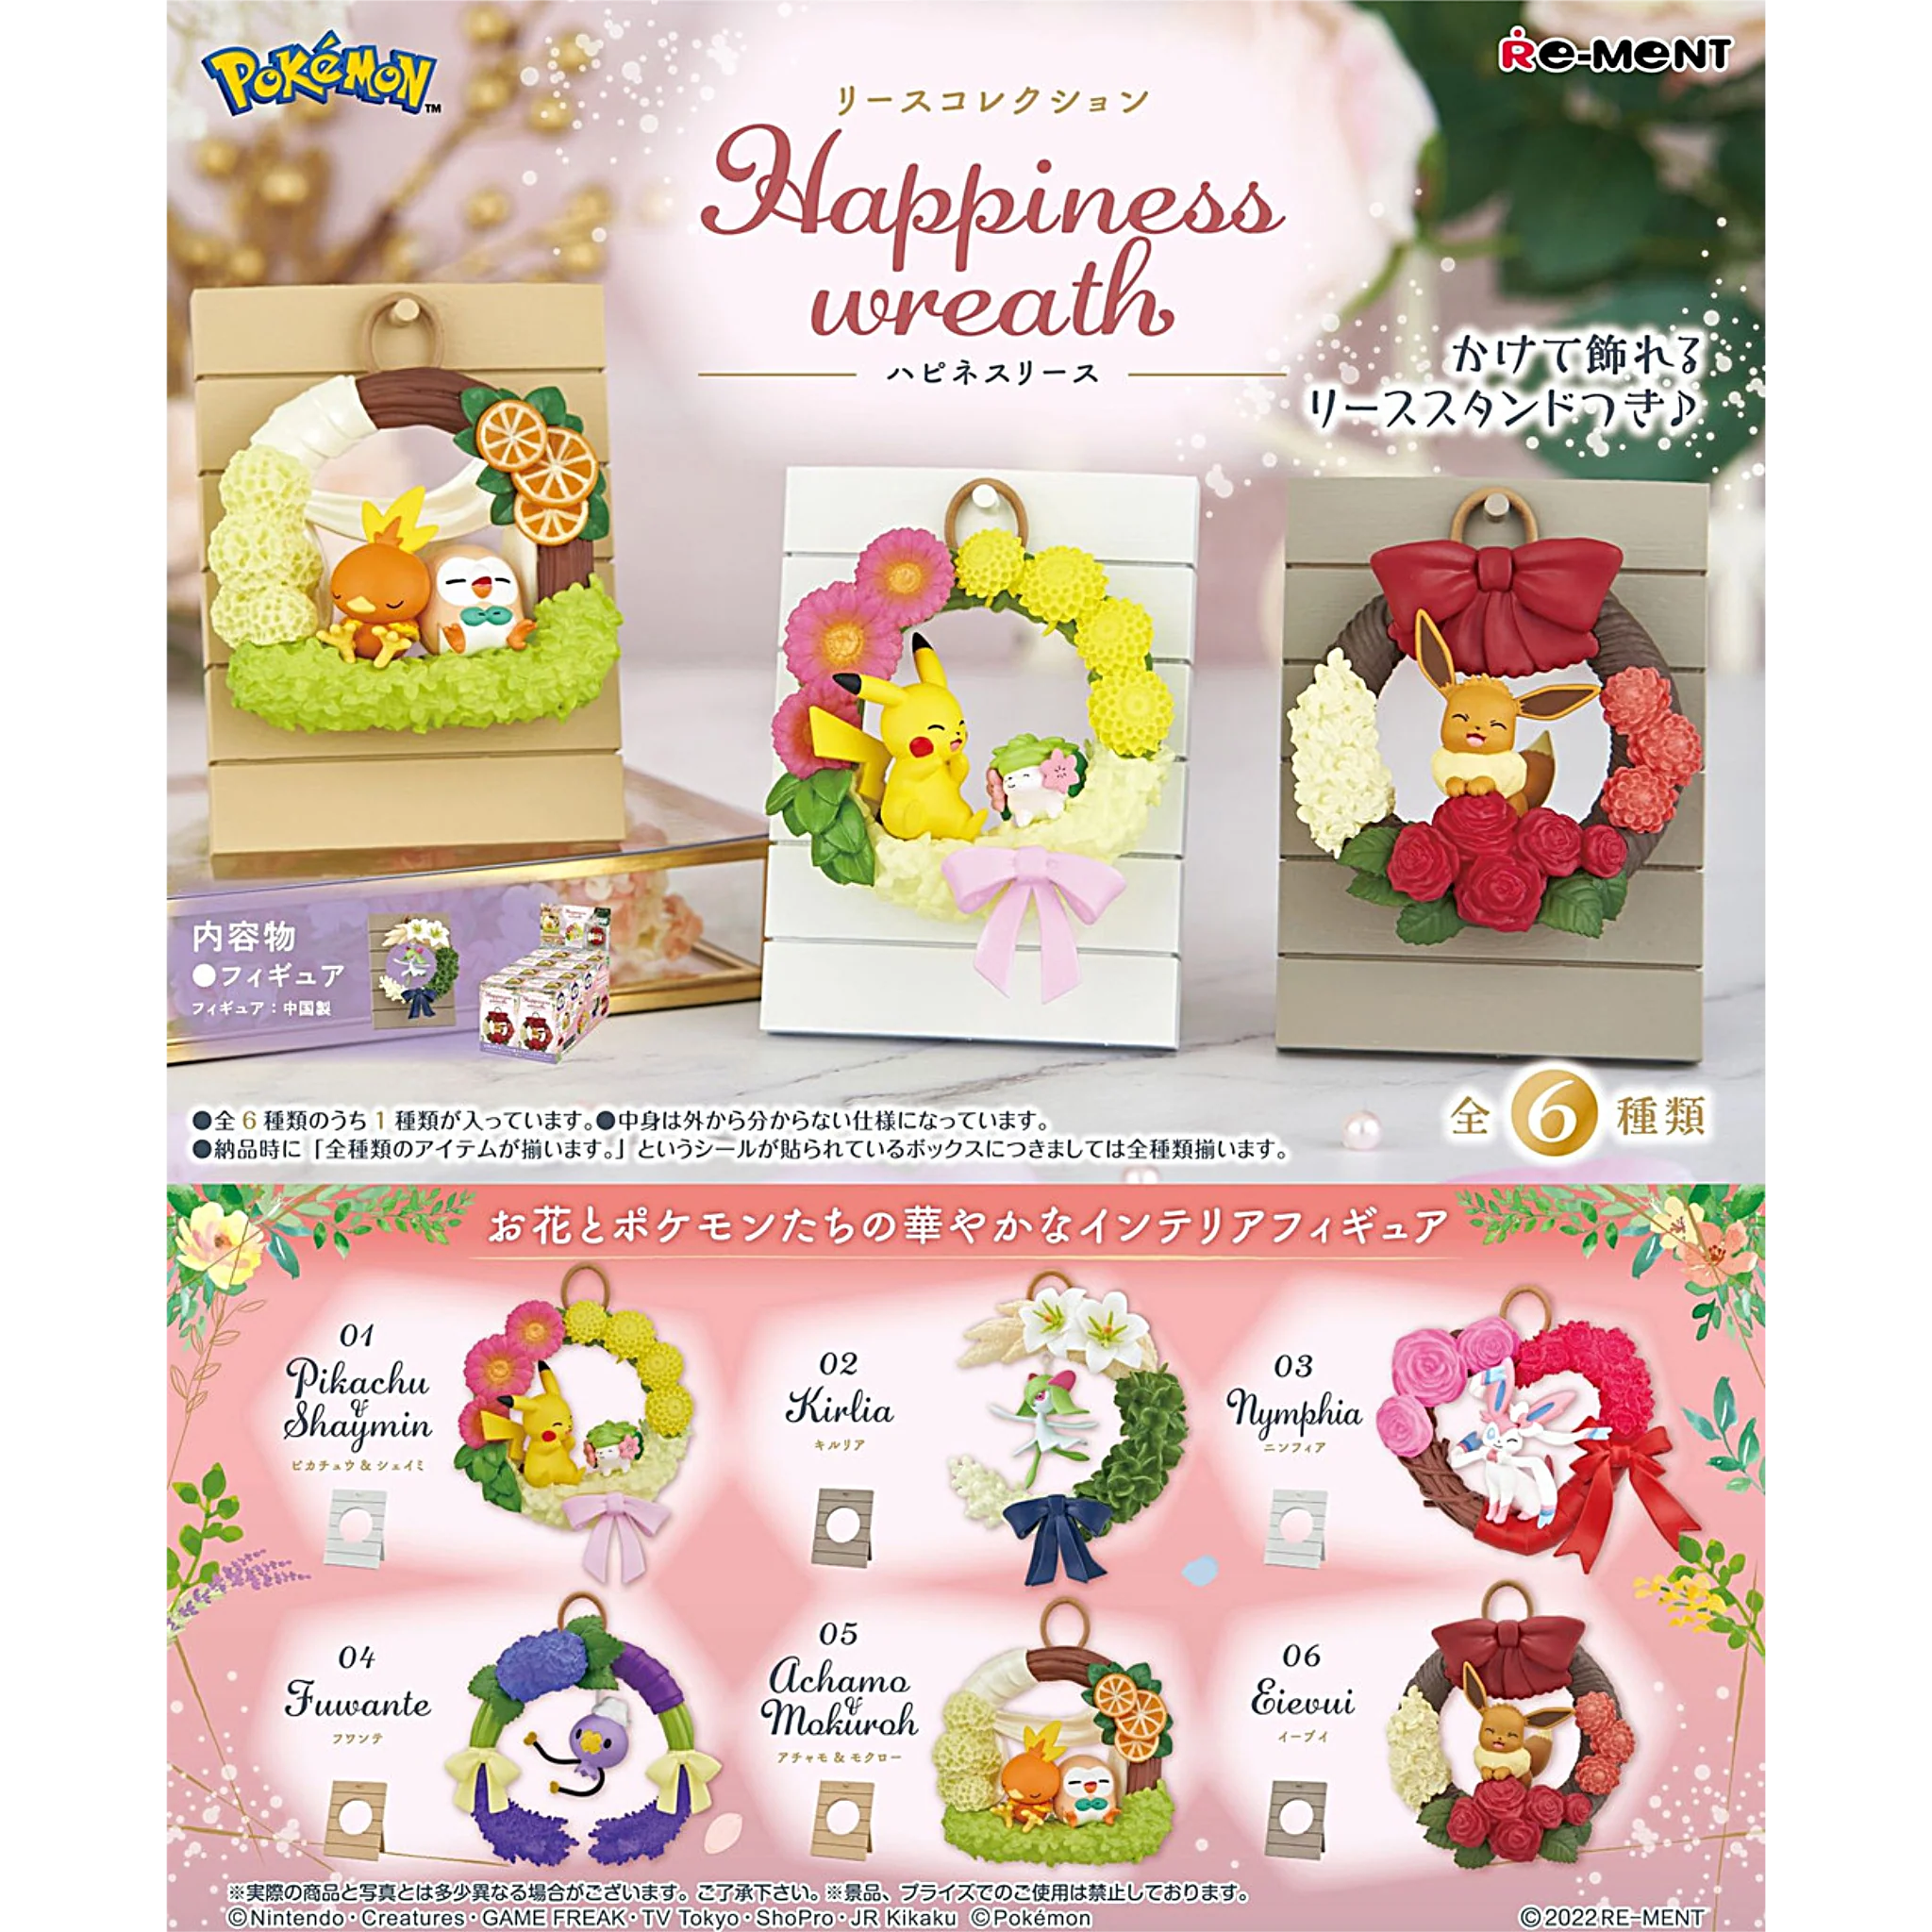 Re-ment Pokémon Happiness Wreath Collection